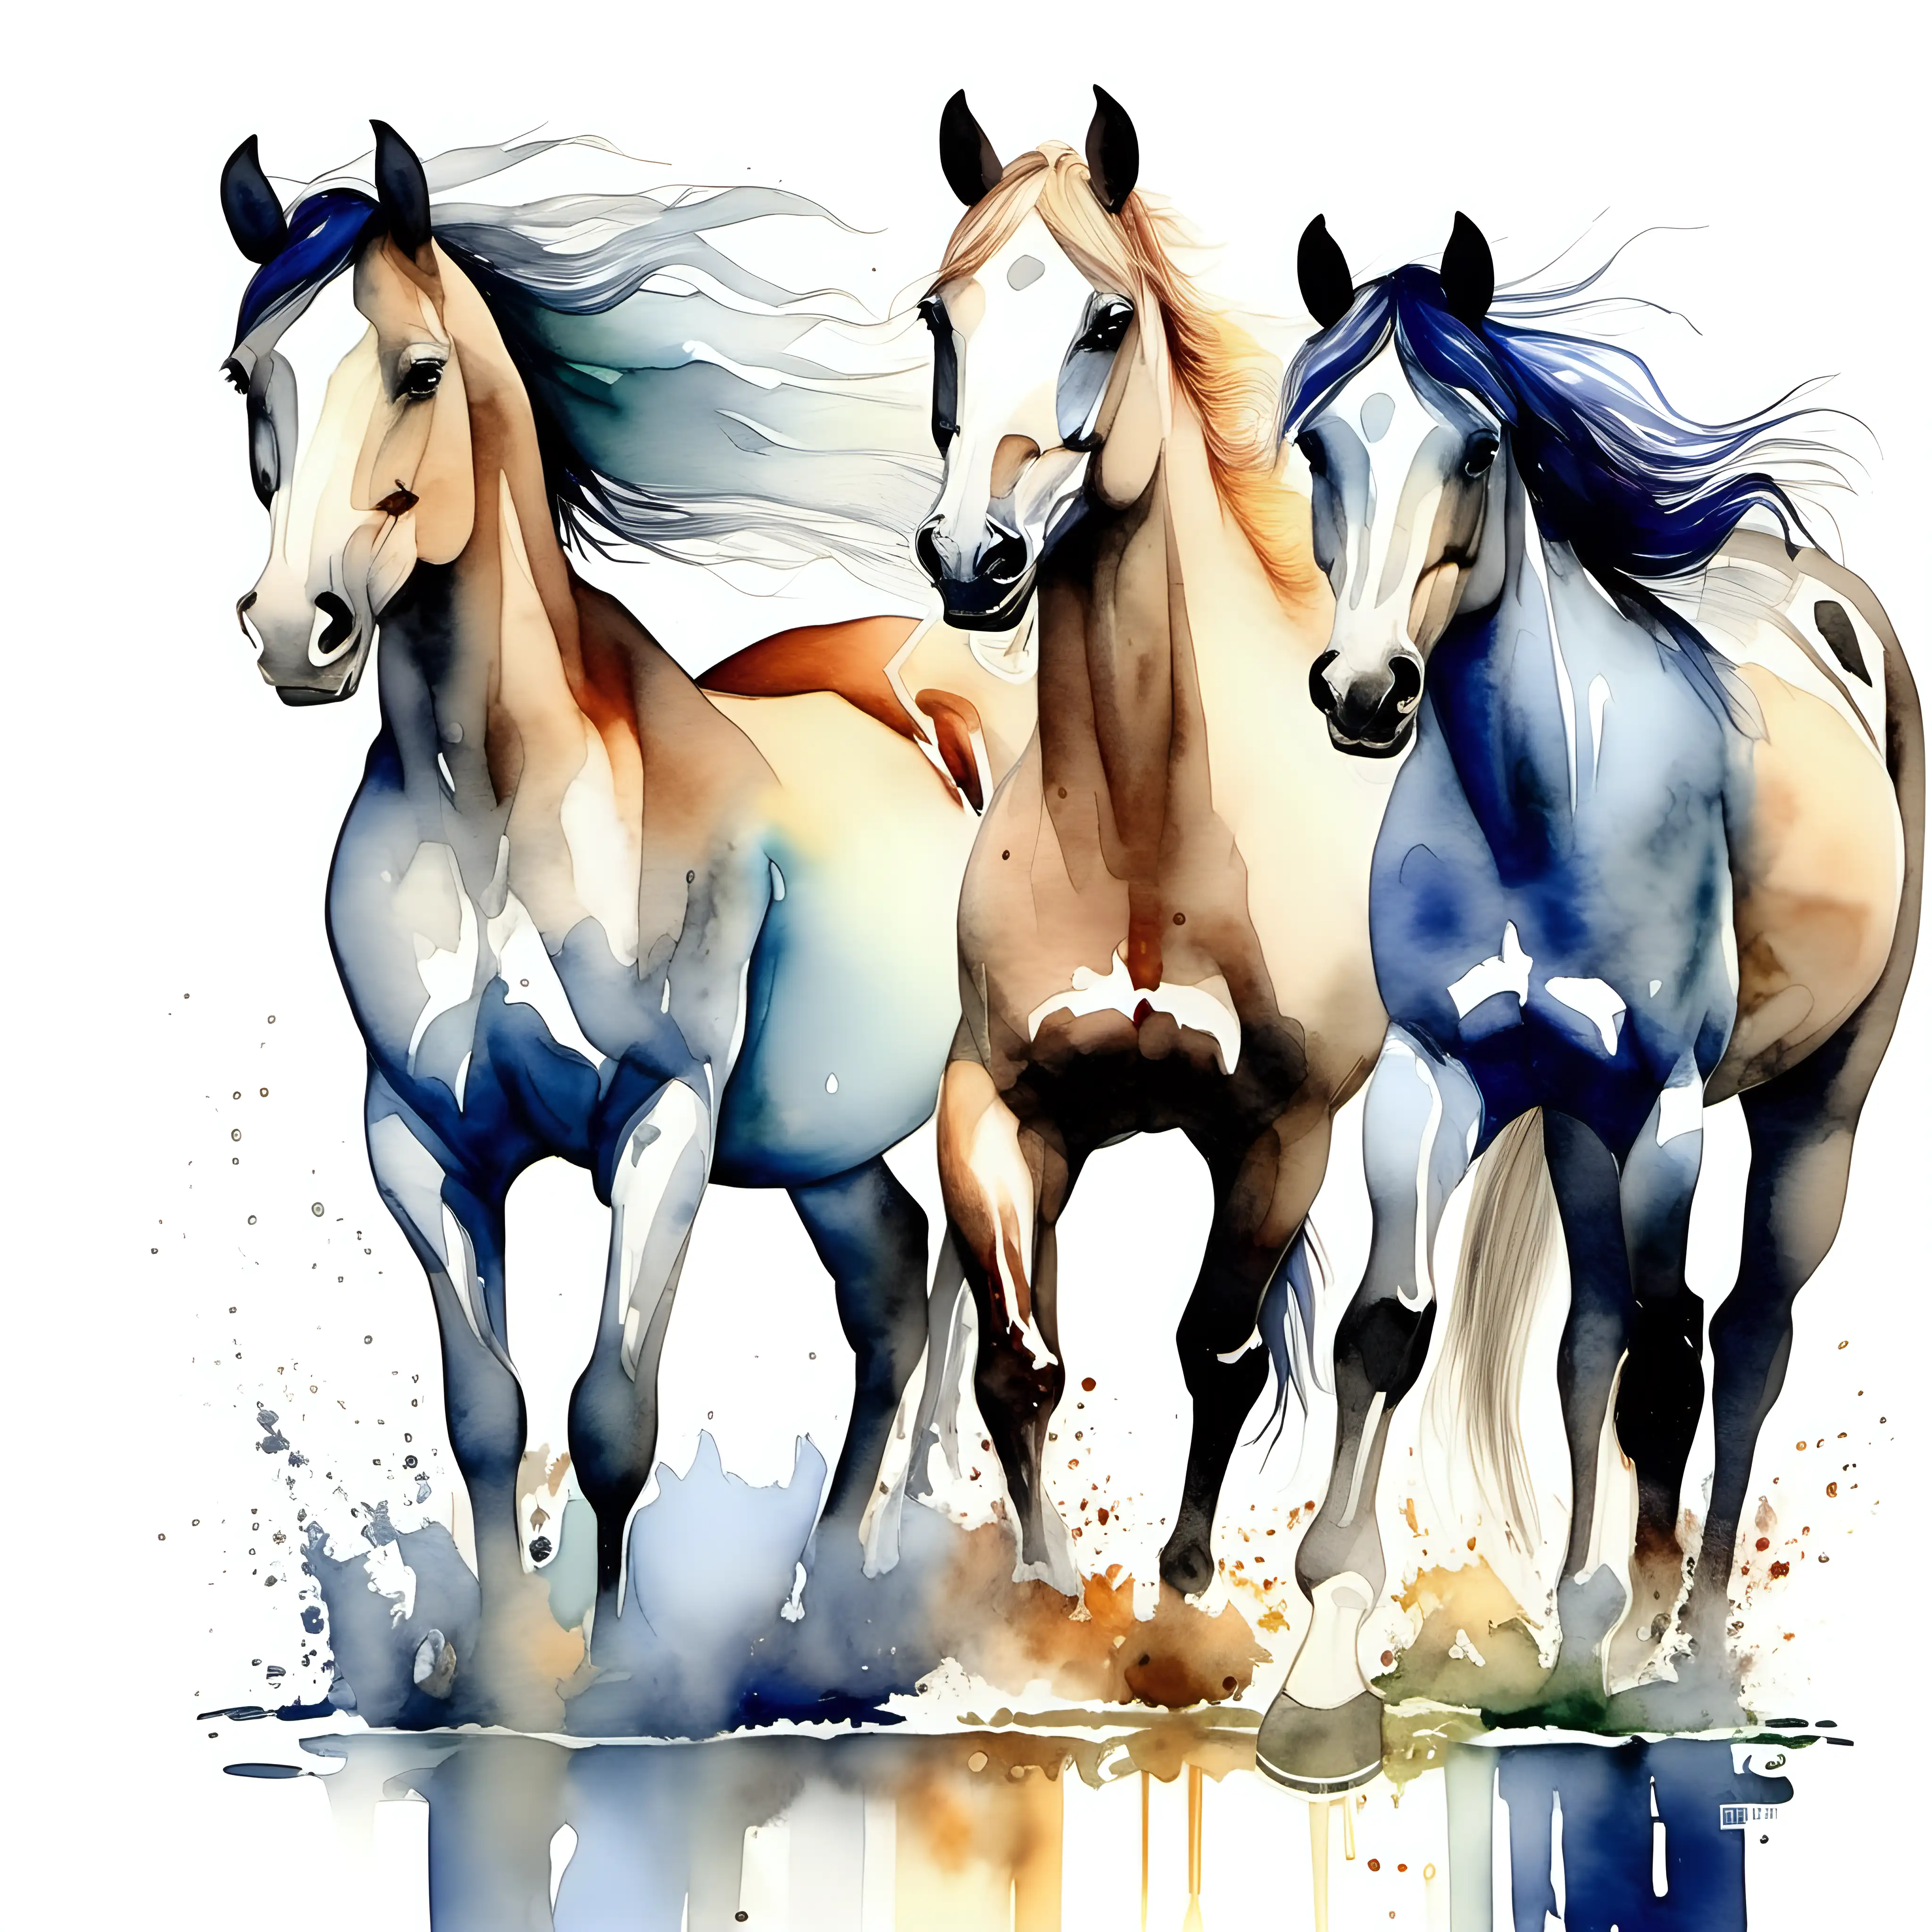 Graceful Watercolored Horses in Full Body Portraits